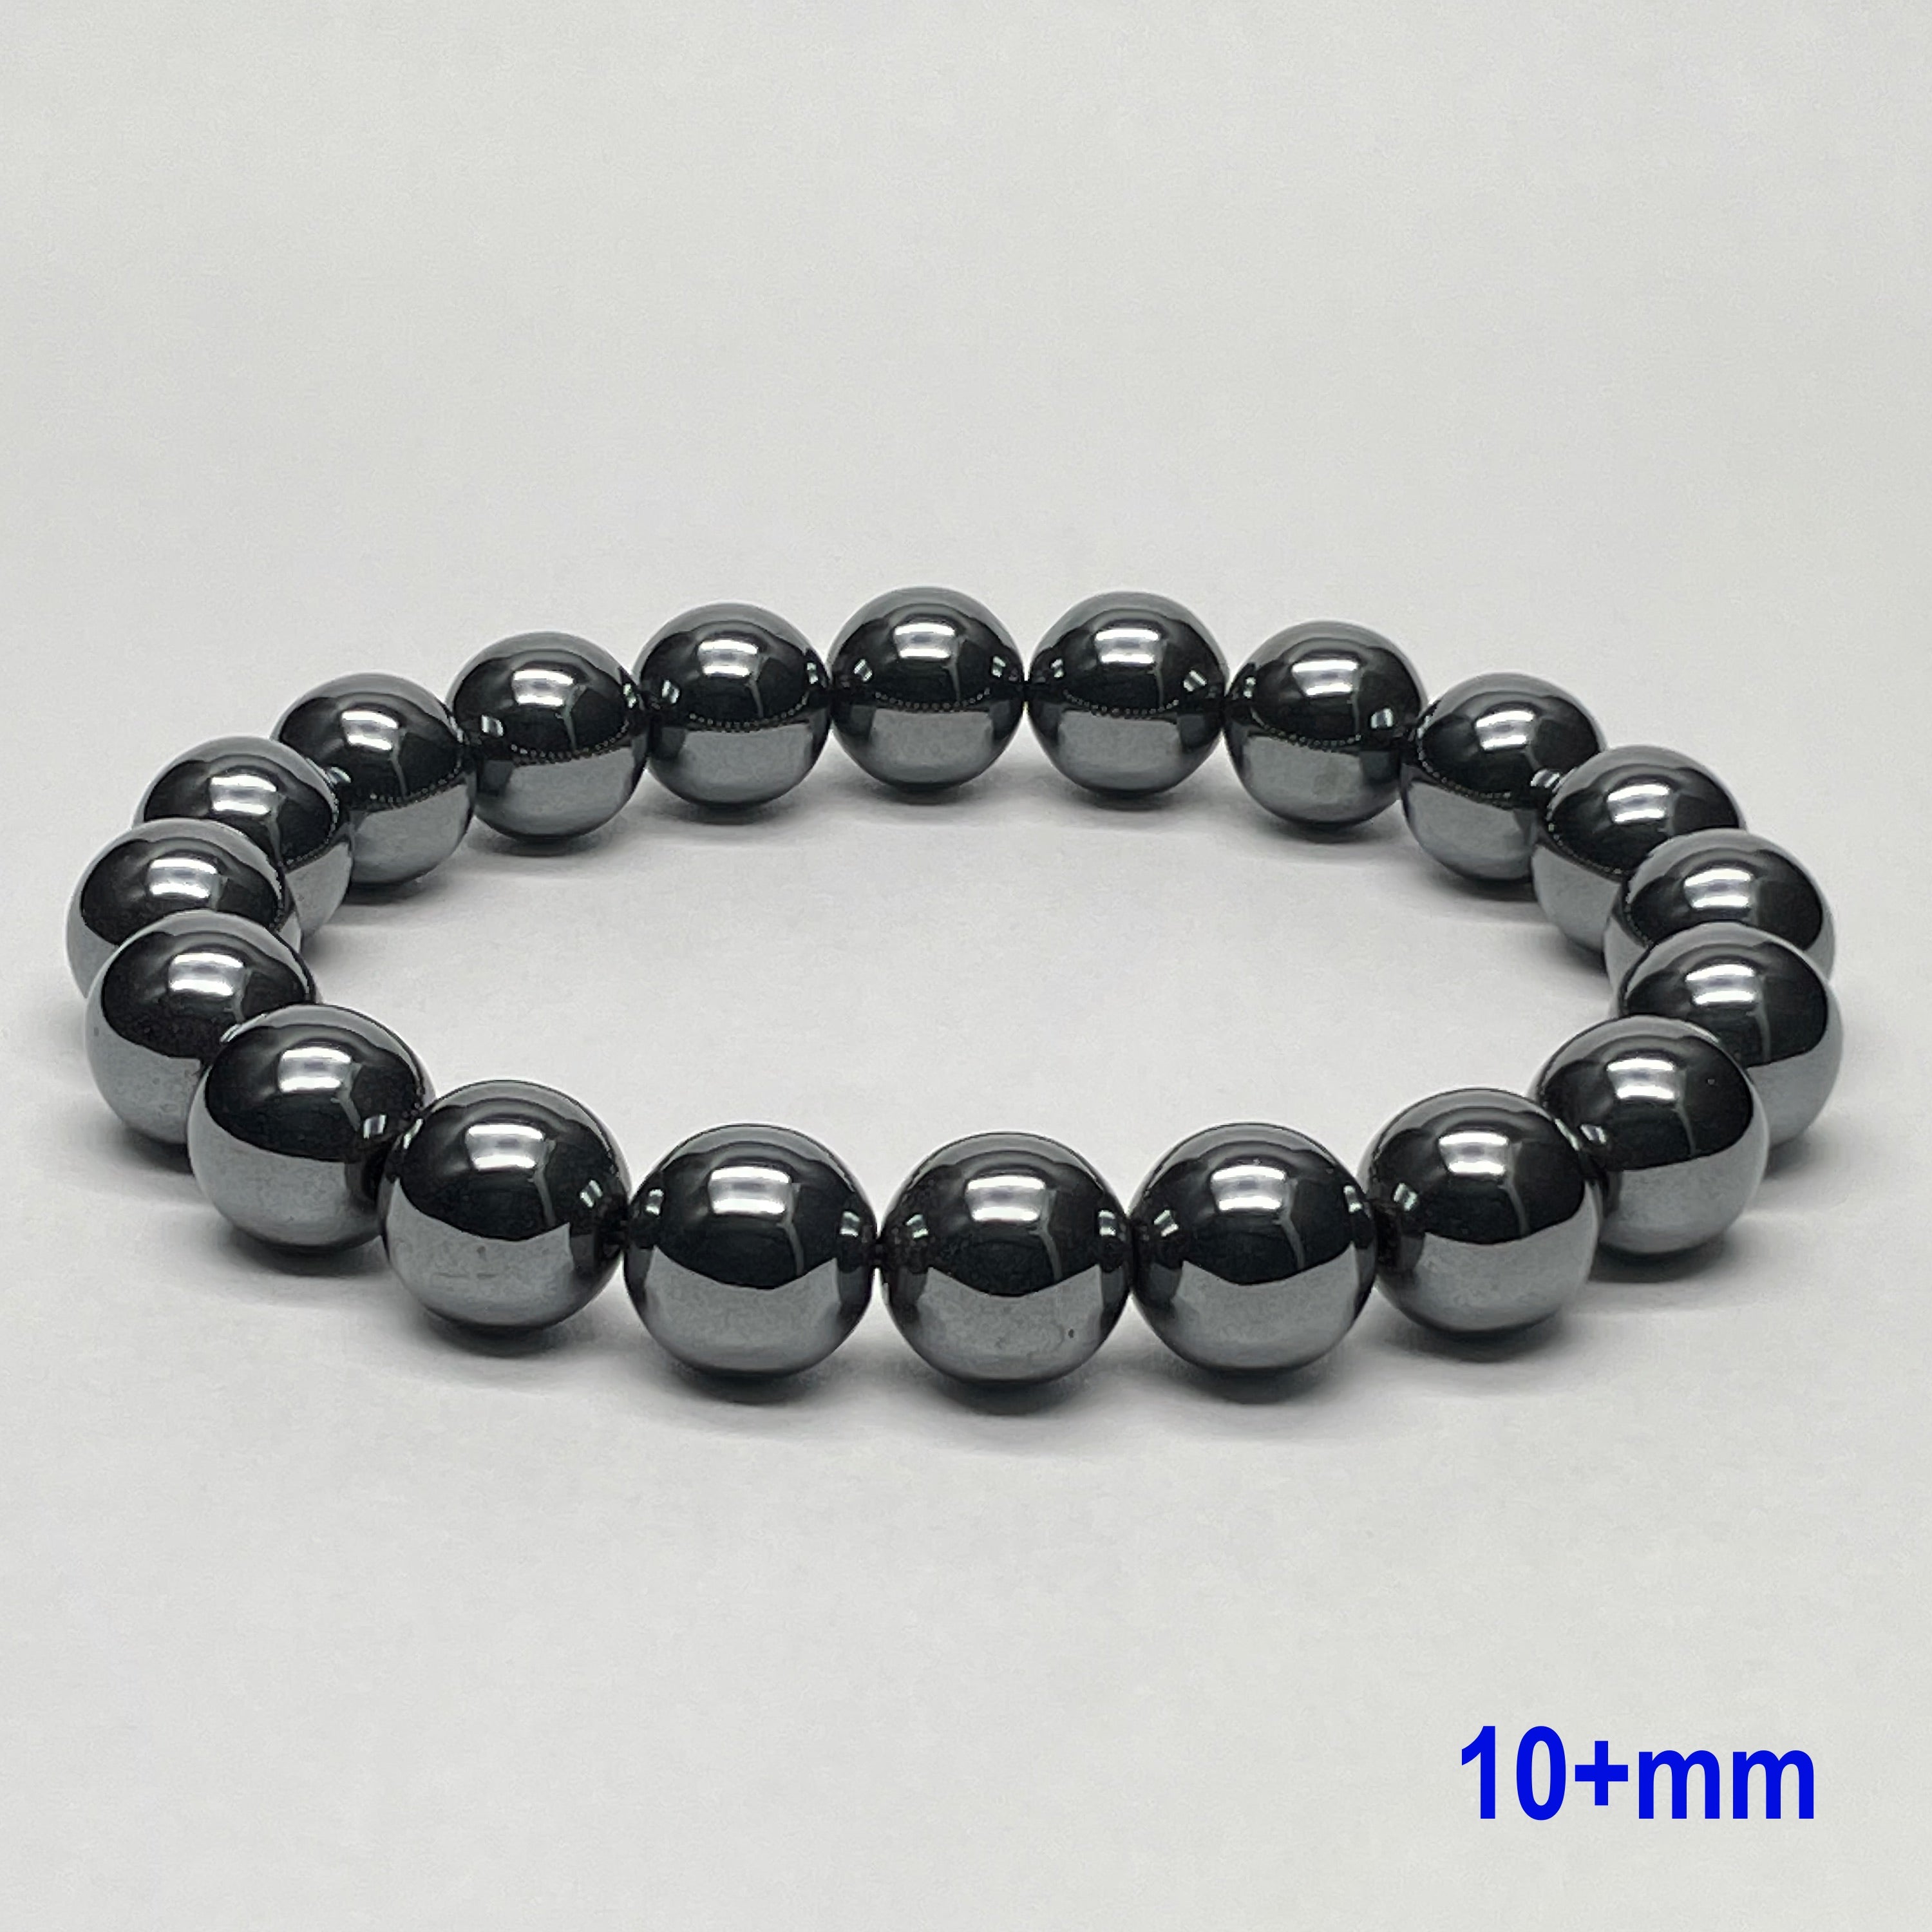 Stonelry Terahertz Beaded Bracelet (8 to 12+mm)